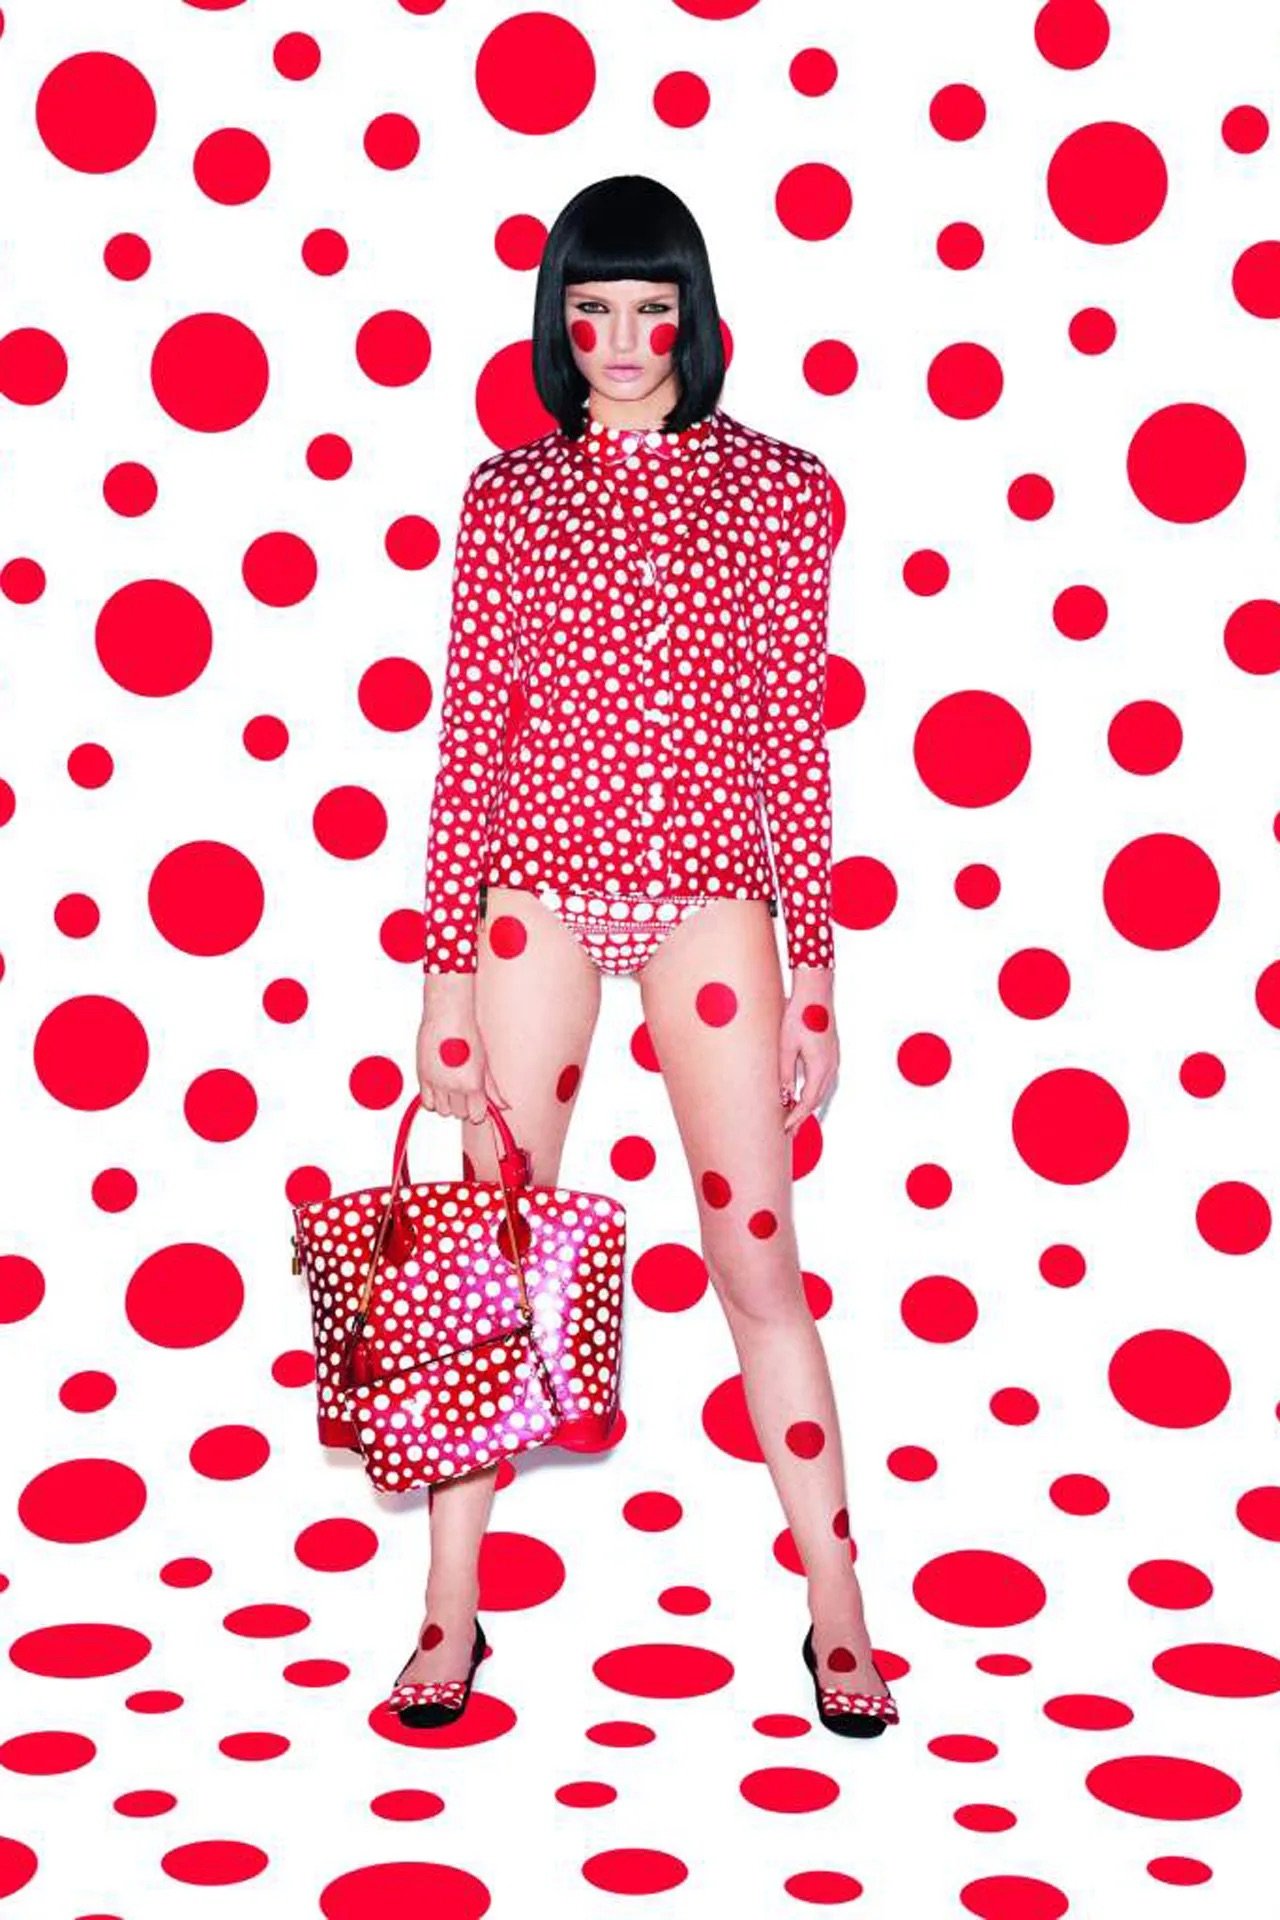 Louis Vuitton x Yayoi Kusama brings polka-dotted frenzy to